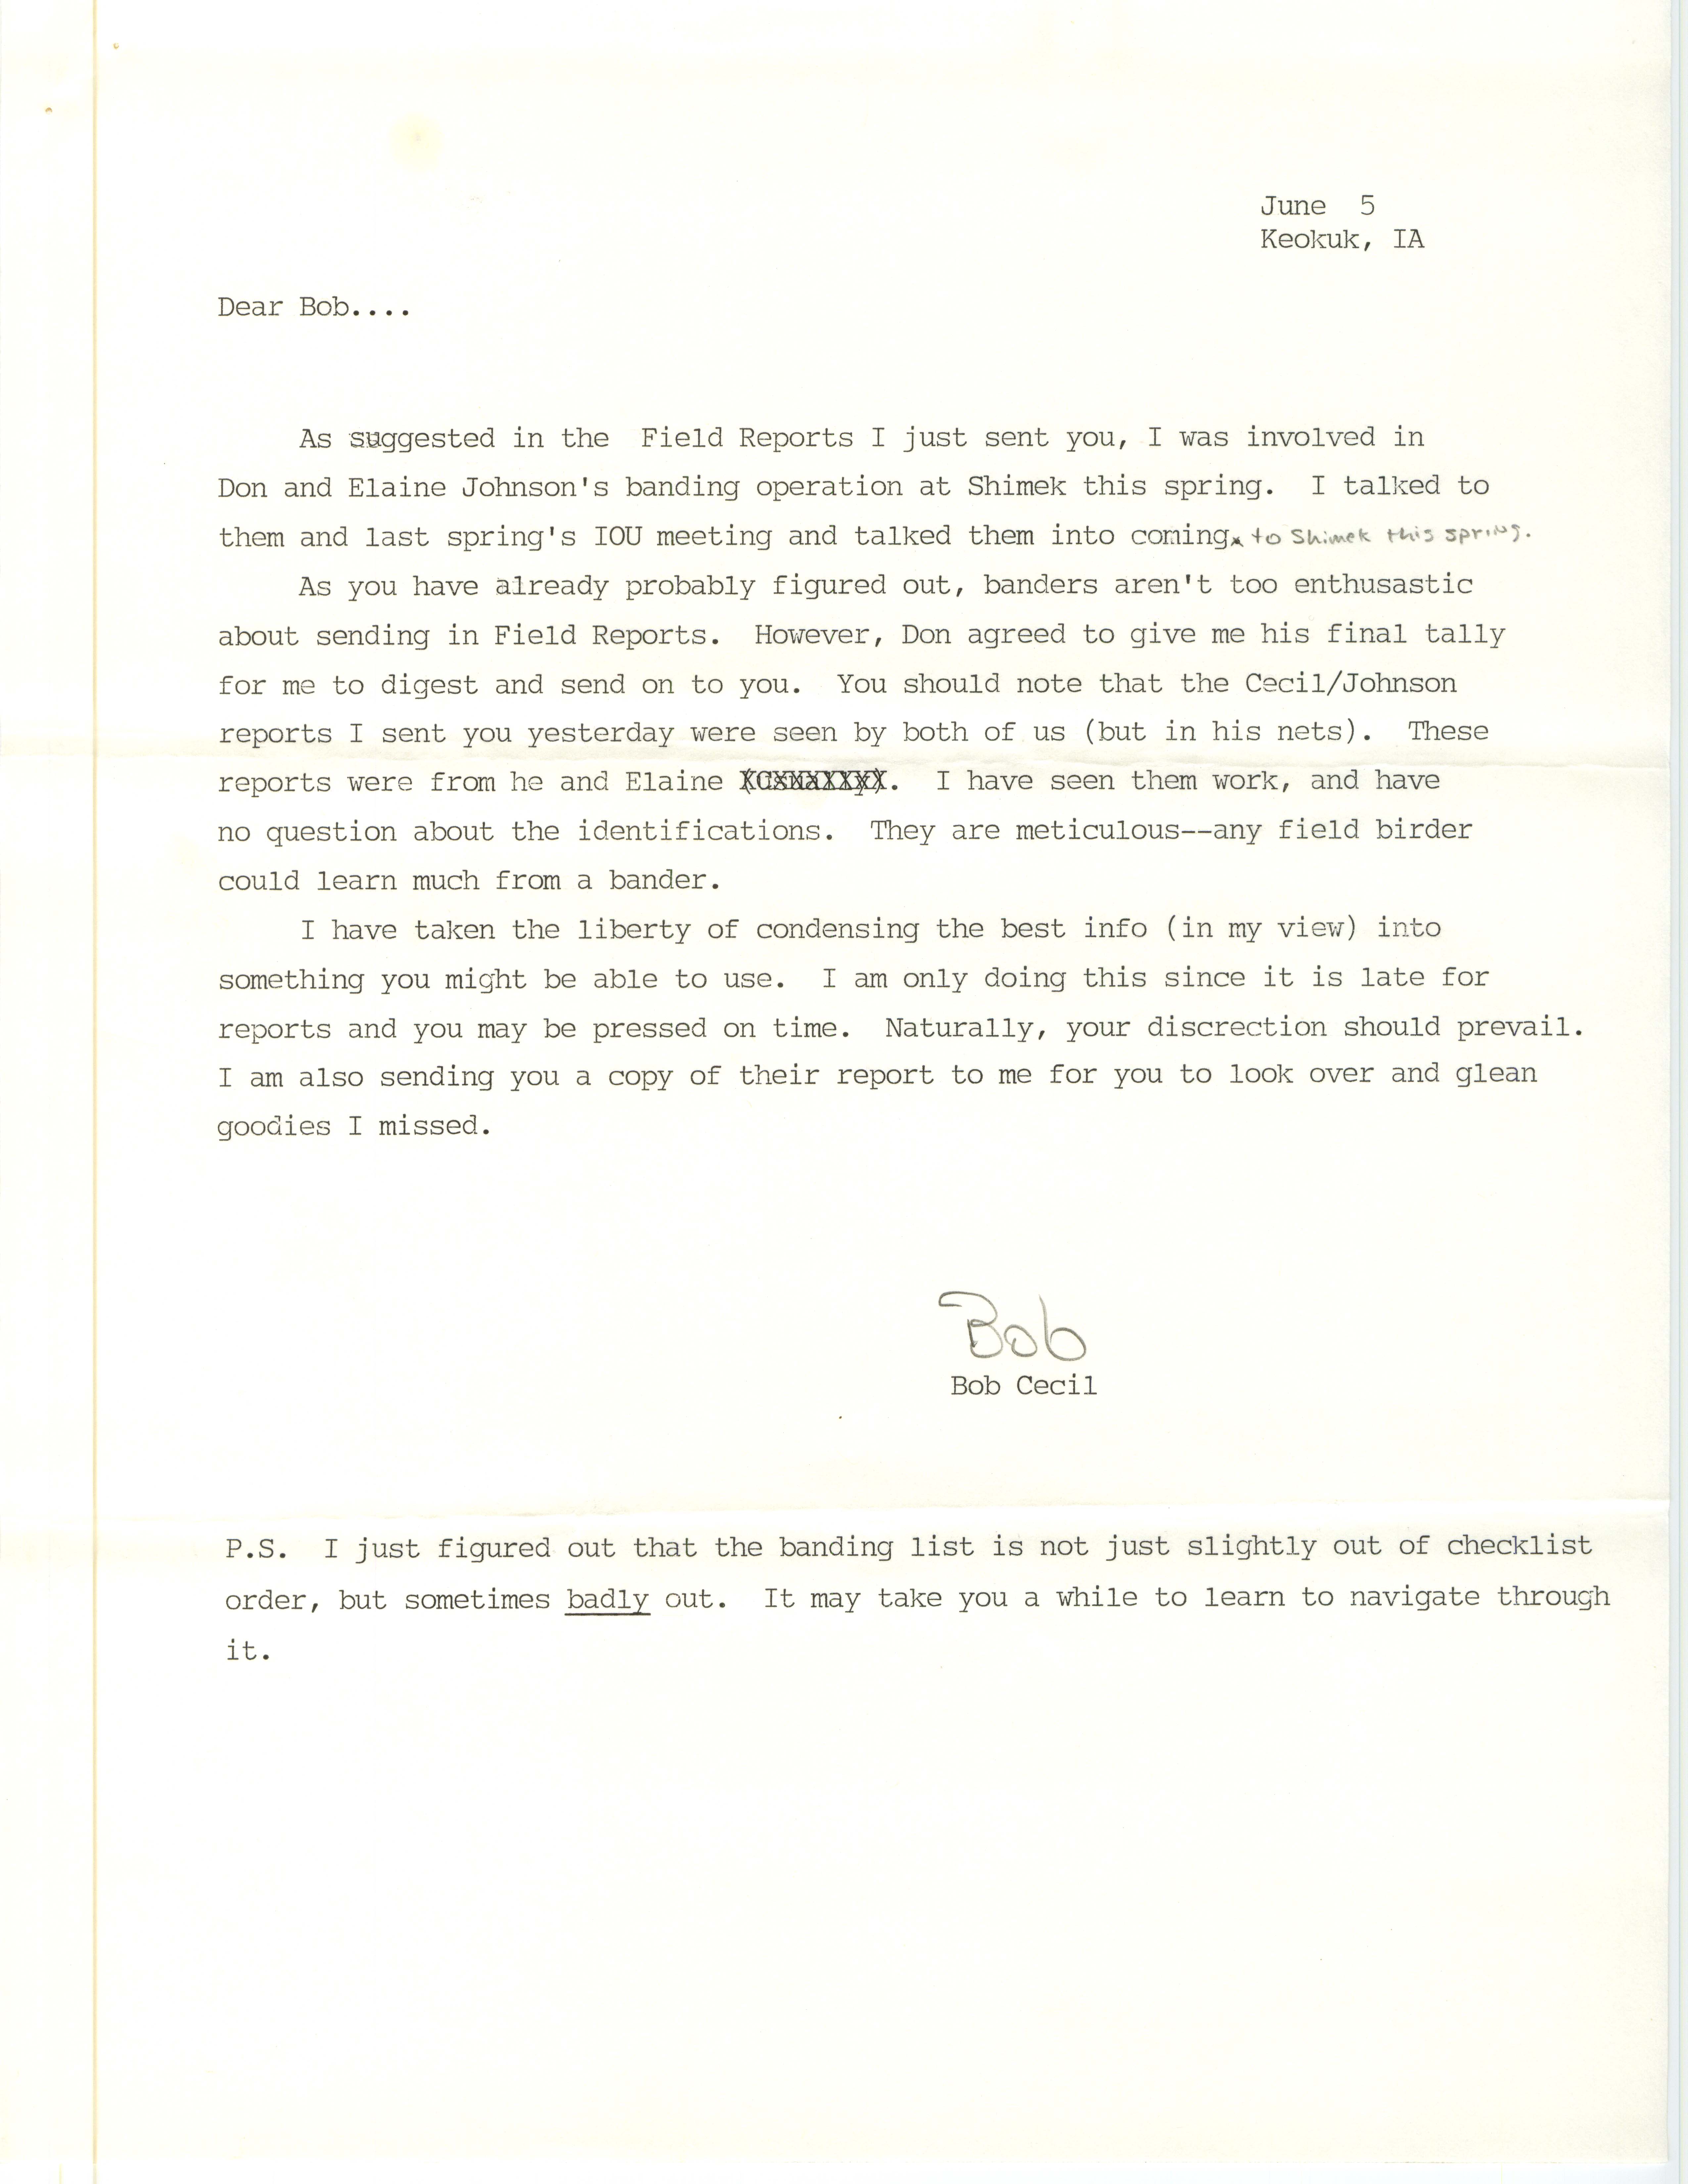 Robert I. Cecil letter to Robert K. Myers regarding bird banding, June 5, 1987